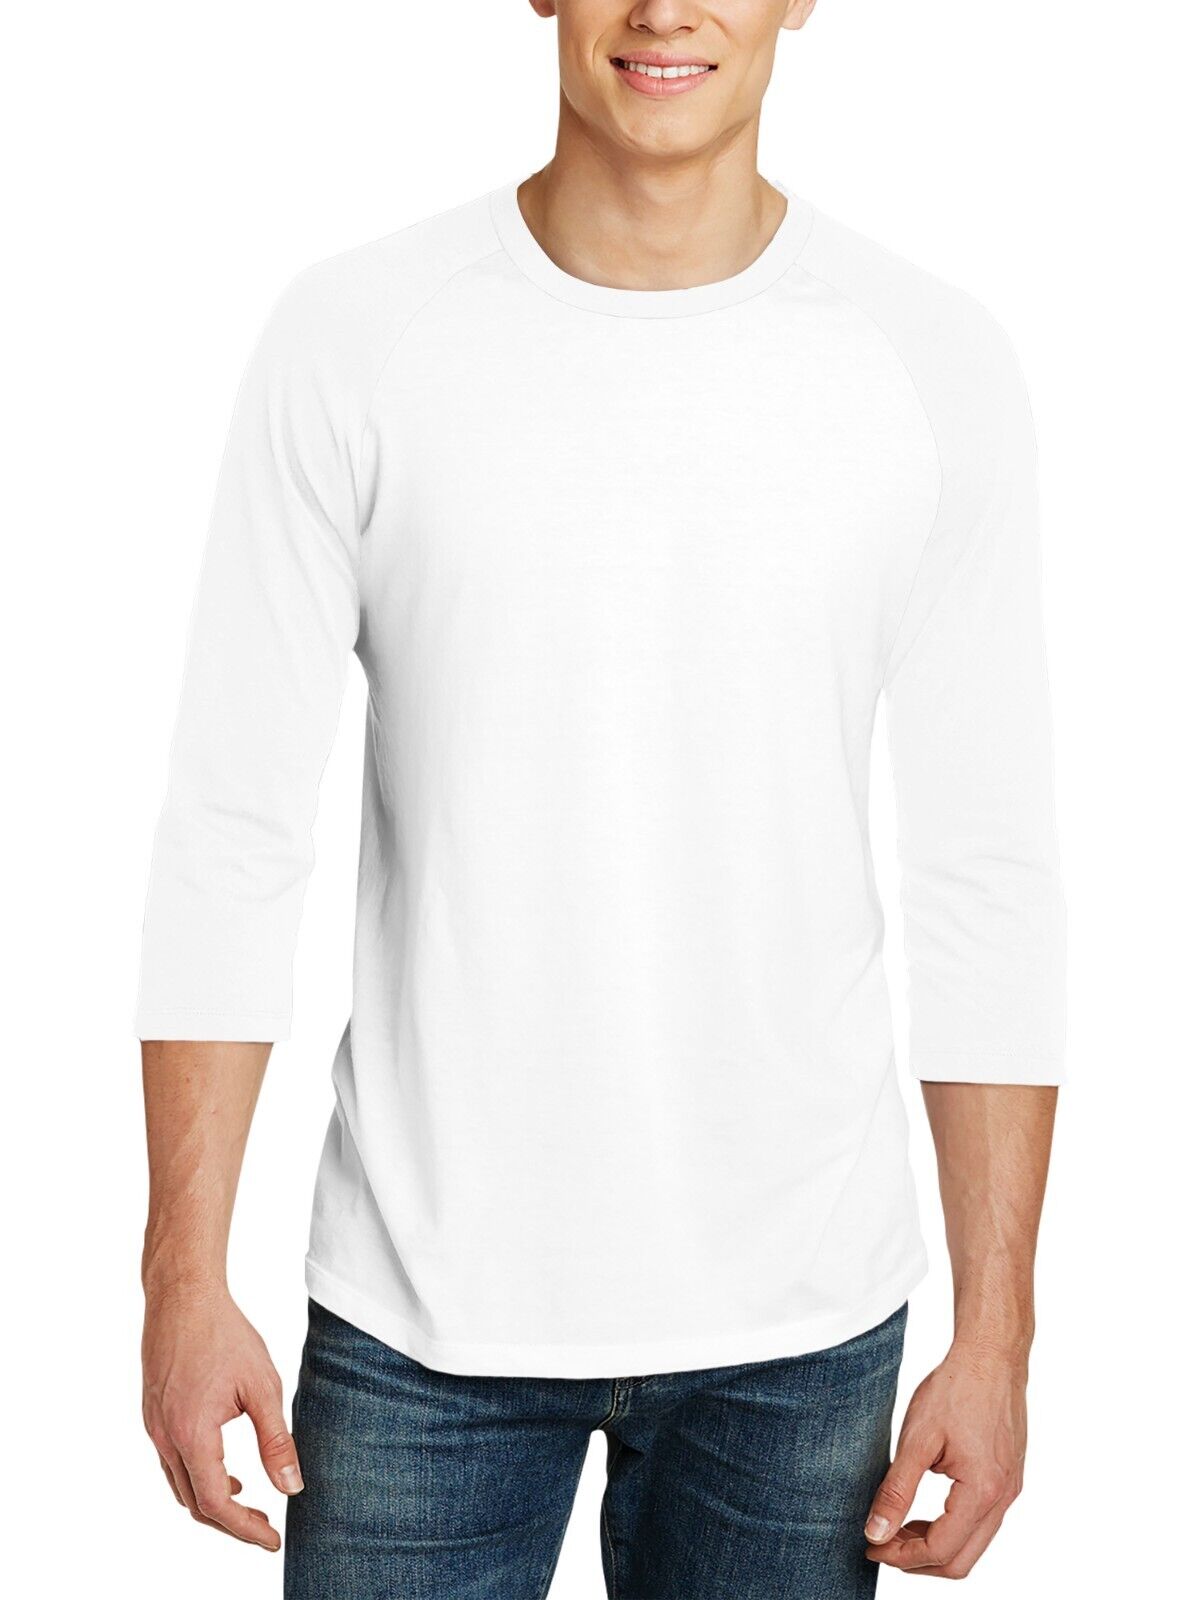 Mens Baseball RAGLAN T Shirts 3/4 Sleeve Tee Plain Team Sport Jersey Solid Casua